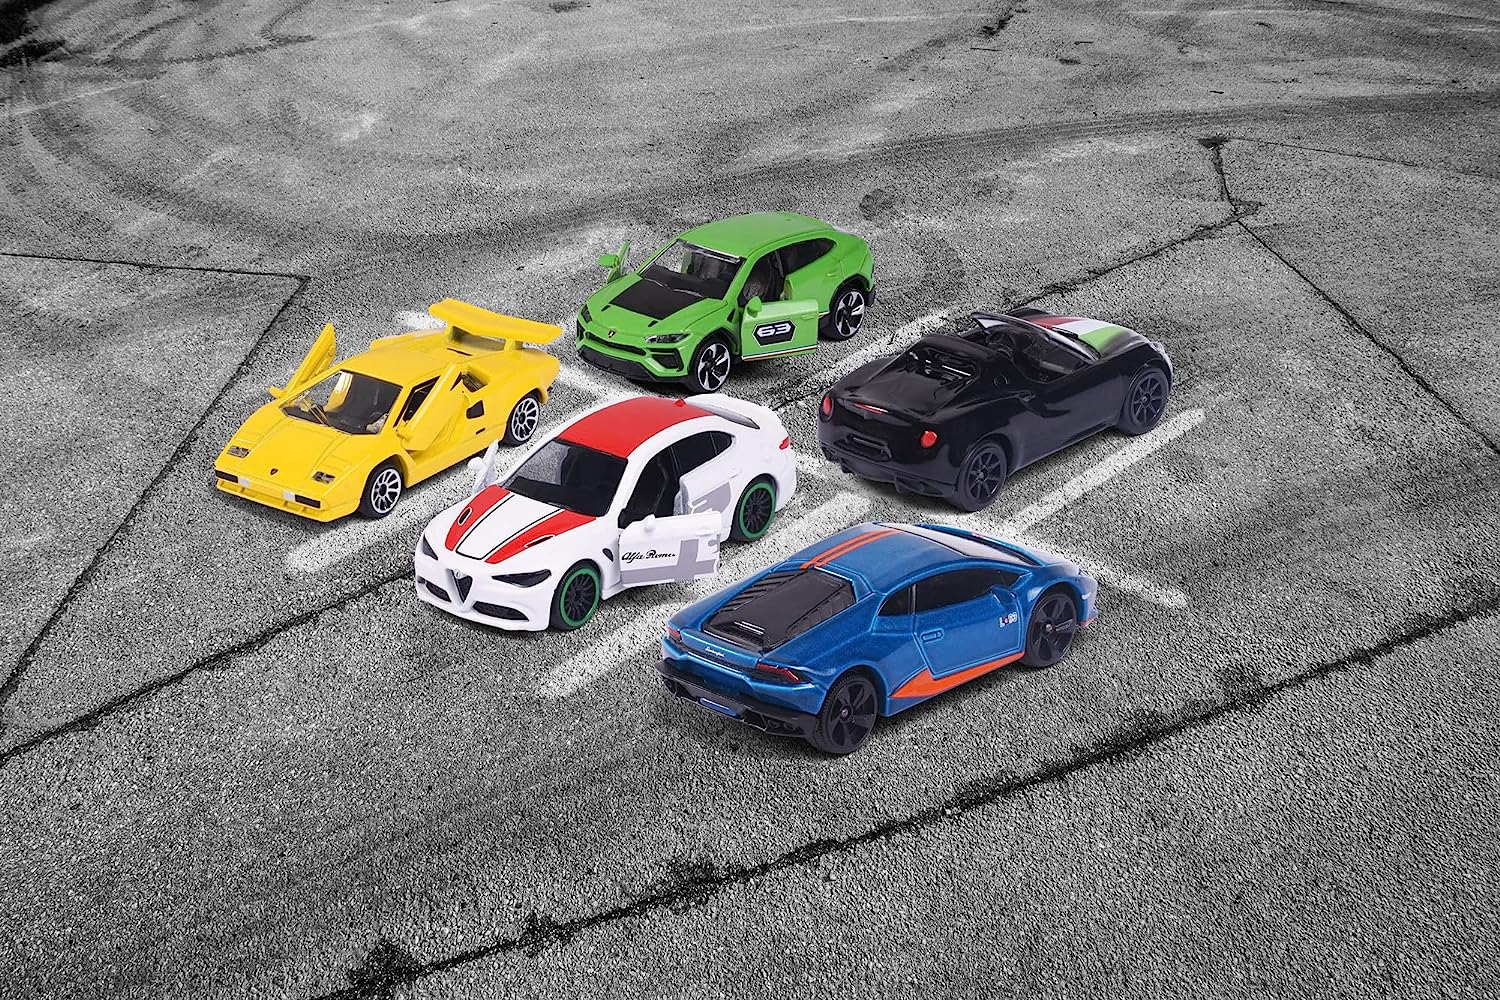 Majorette Dream Italian Vehicles Series 5 Car Gift Set For Kids Ages 3+